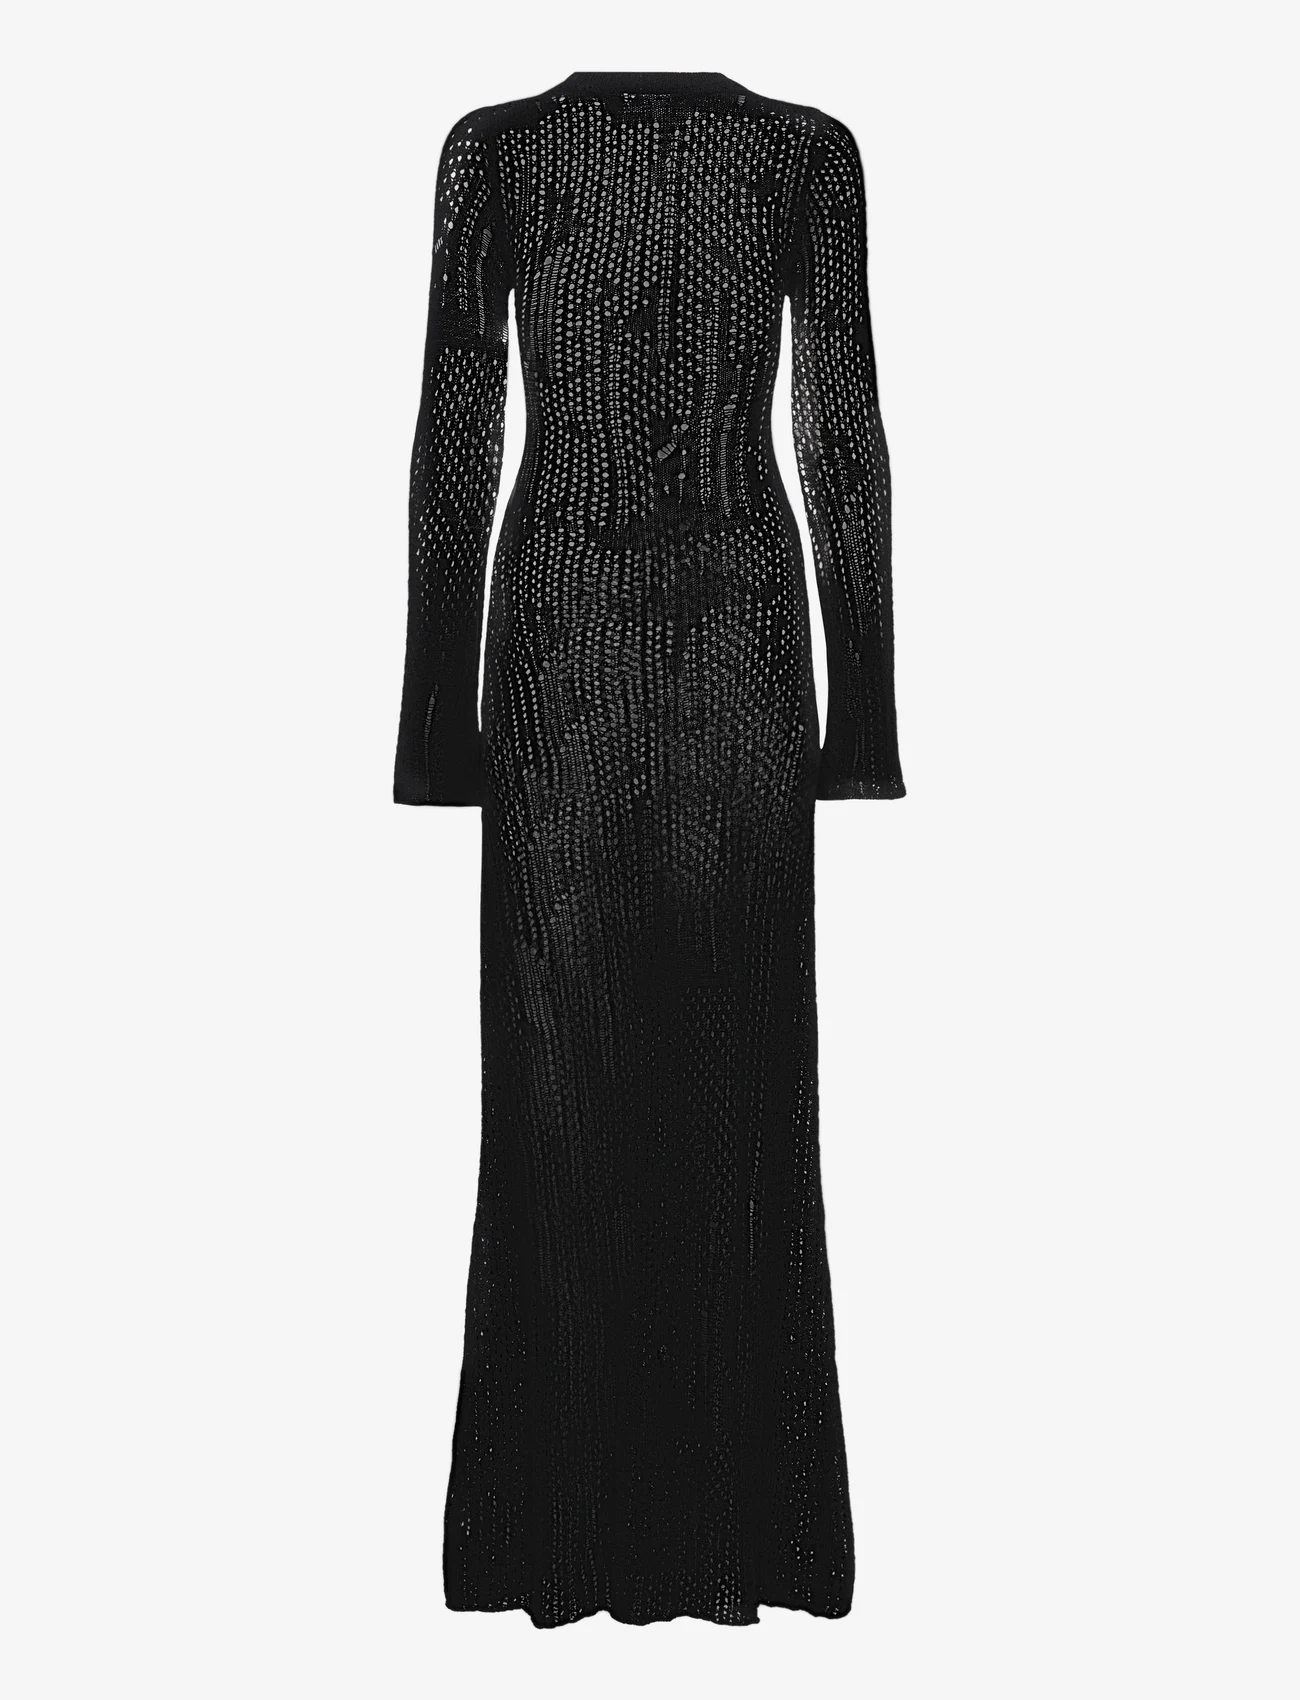 H2O Fagerholt - Nutto Dress - knitted dresses - deep black - 1